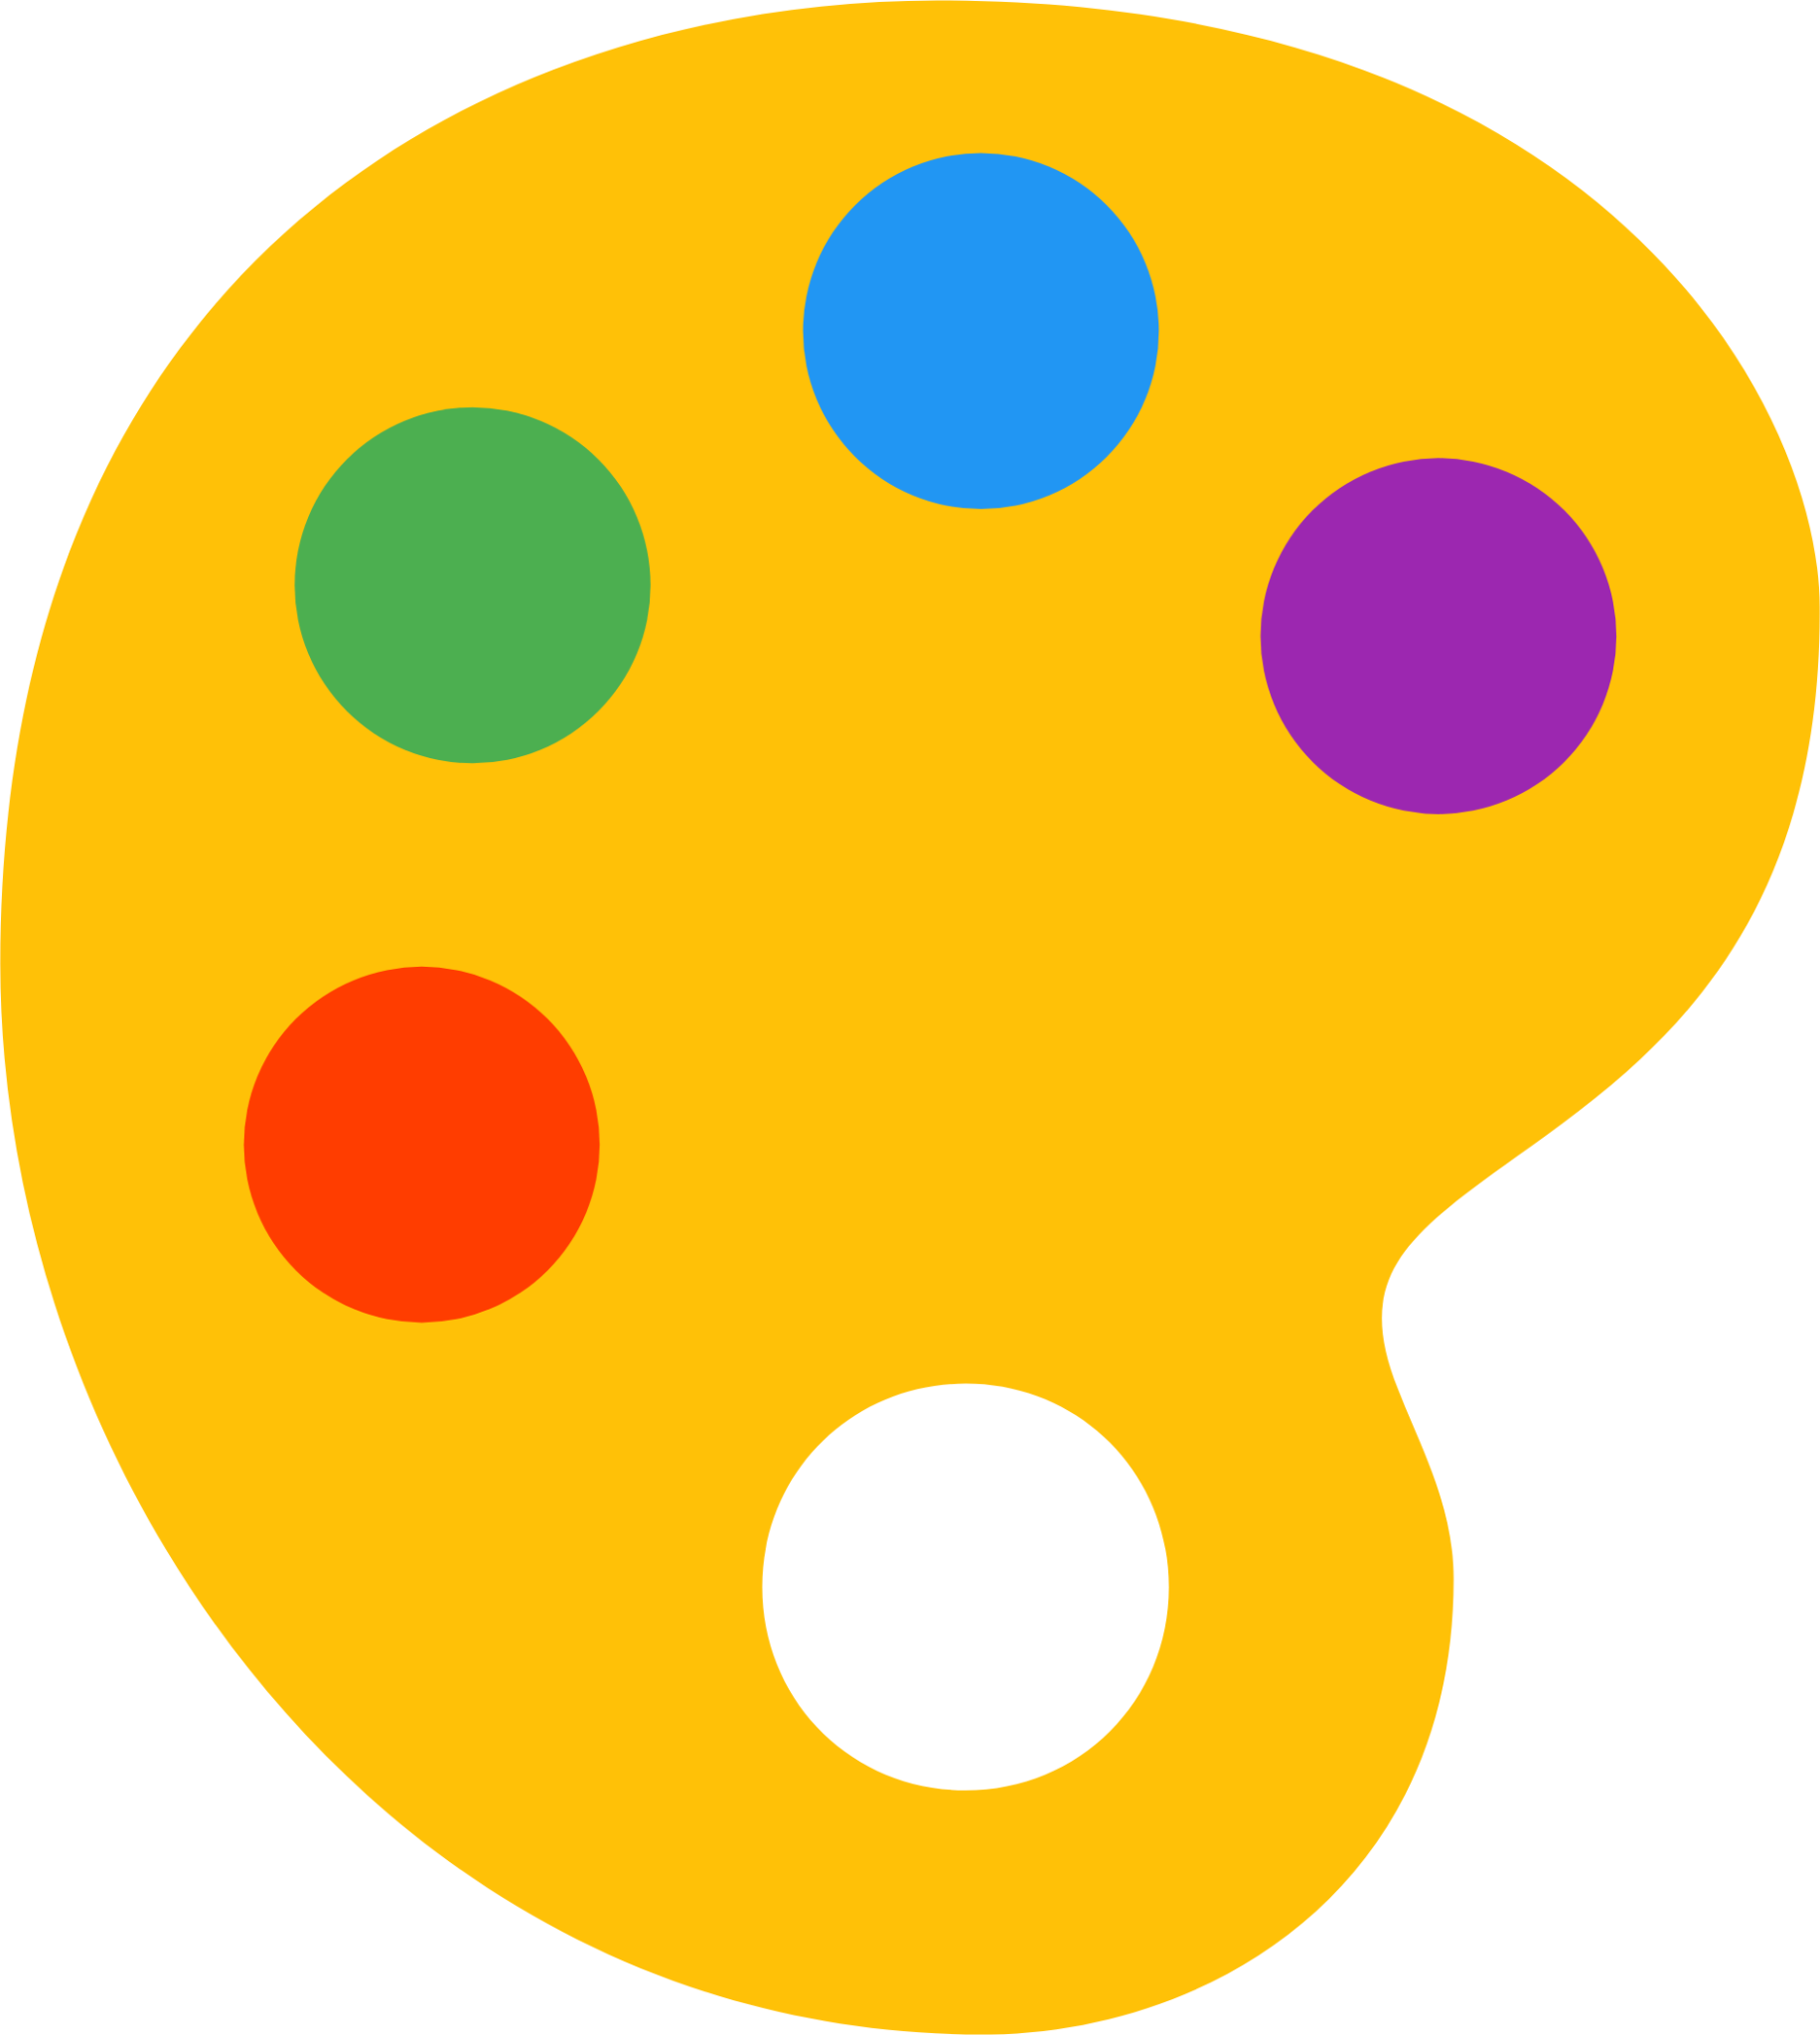 gui palette icon